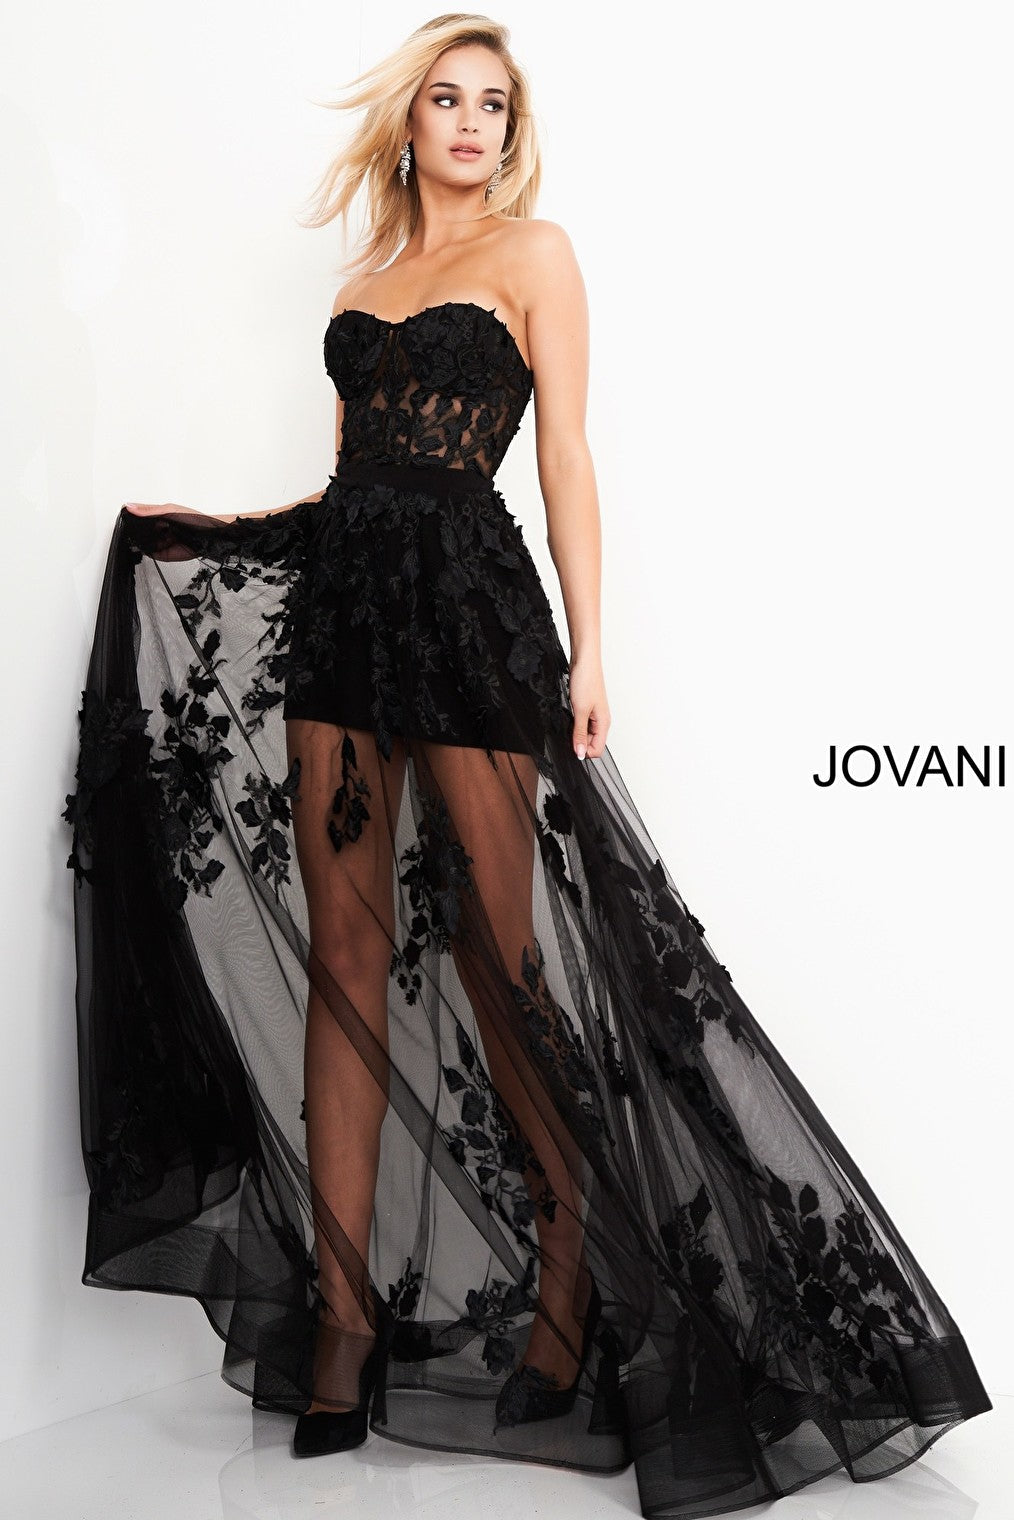 Black floral applique Jovani prom dress 02845